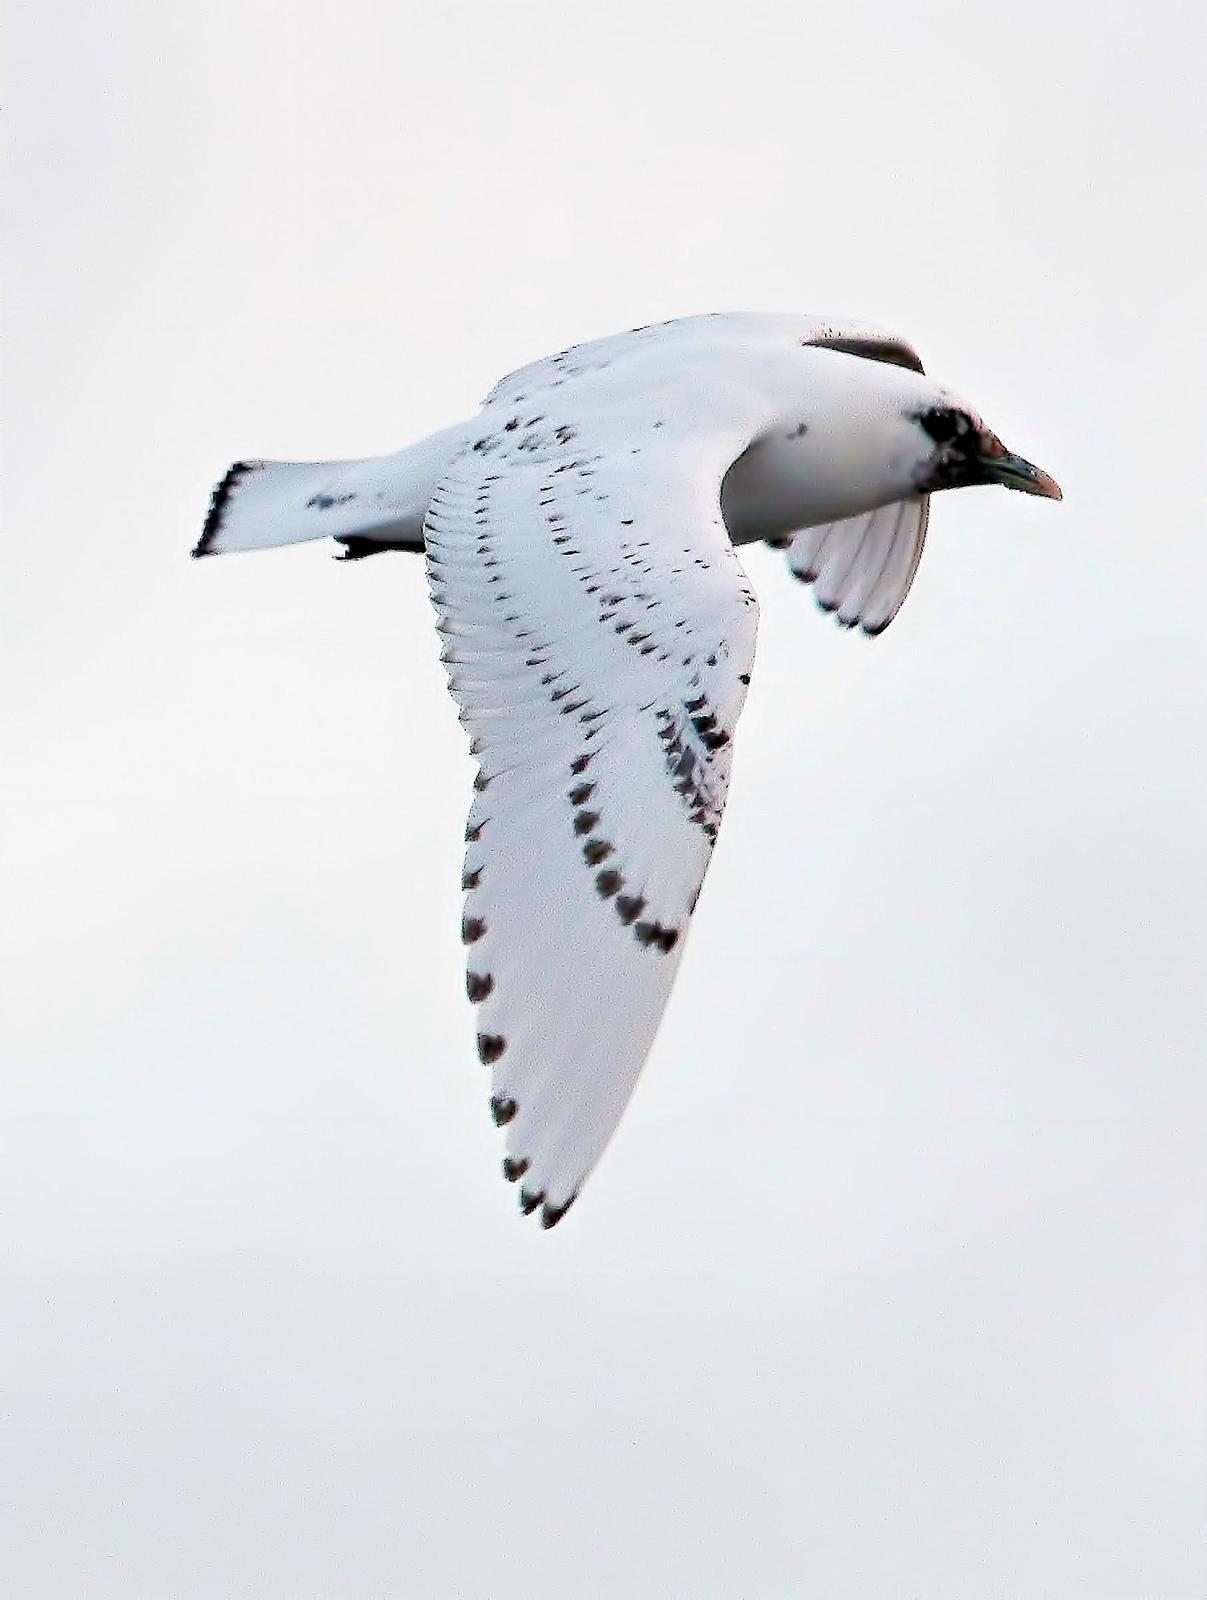 Ivory Gull Photo by Dan Tallman